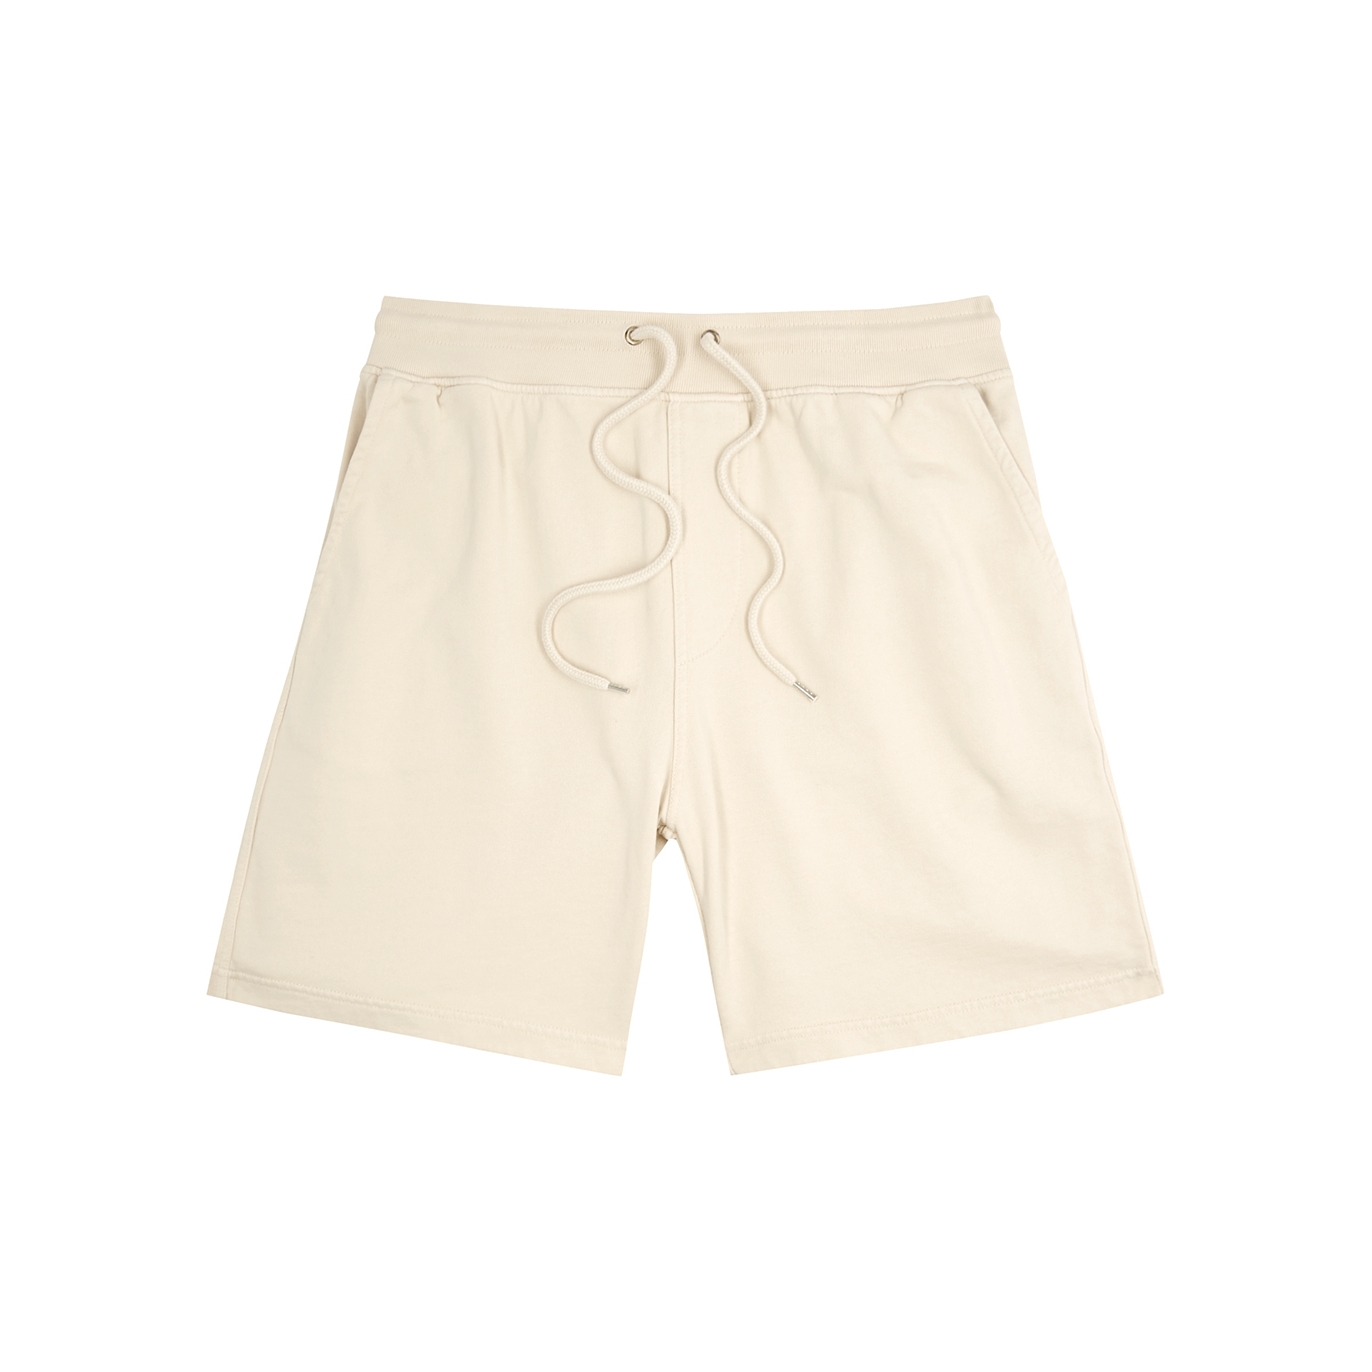 Colorful Standard Cream Cotton Shorts